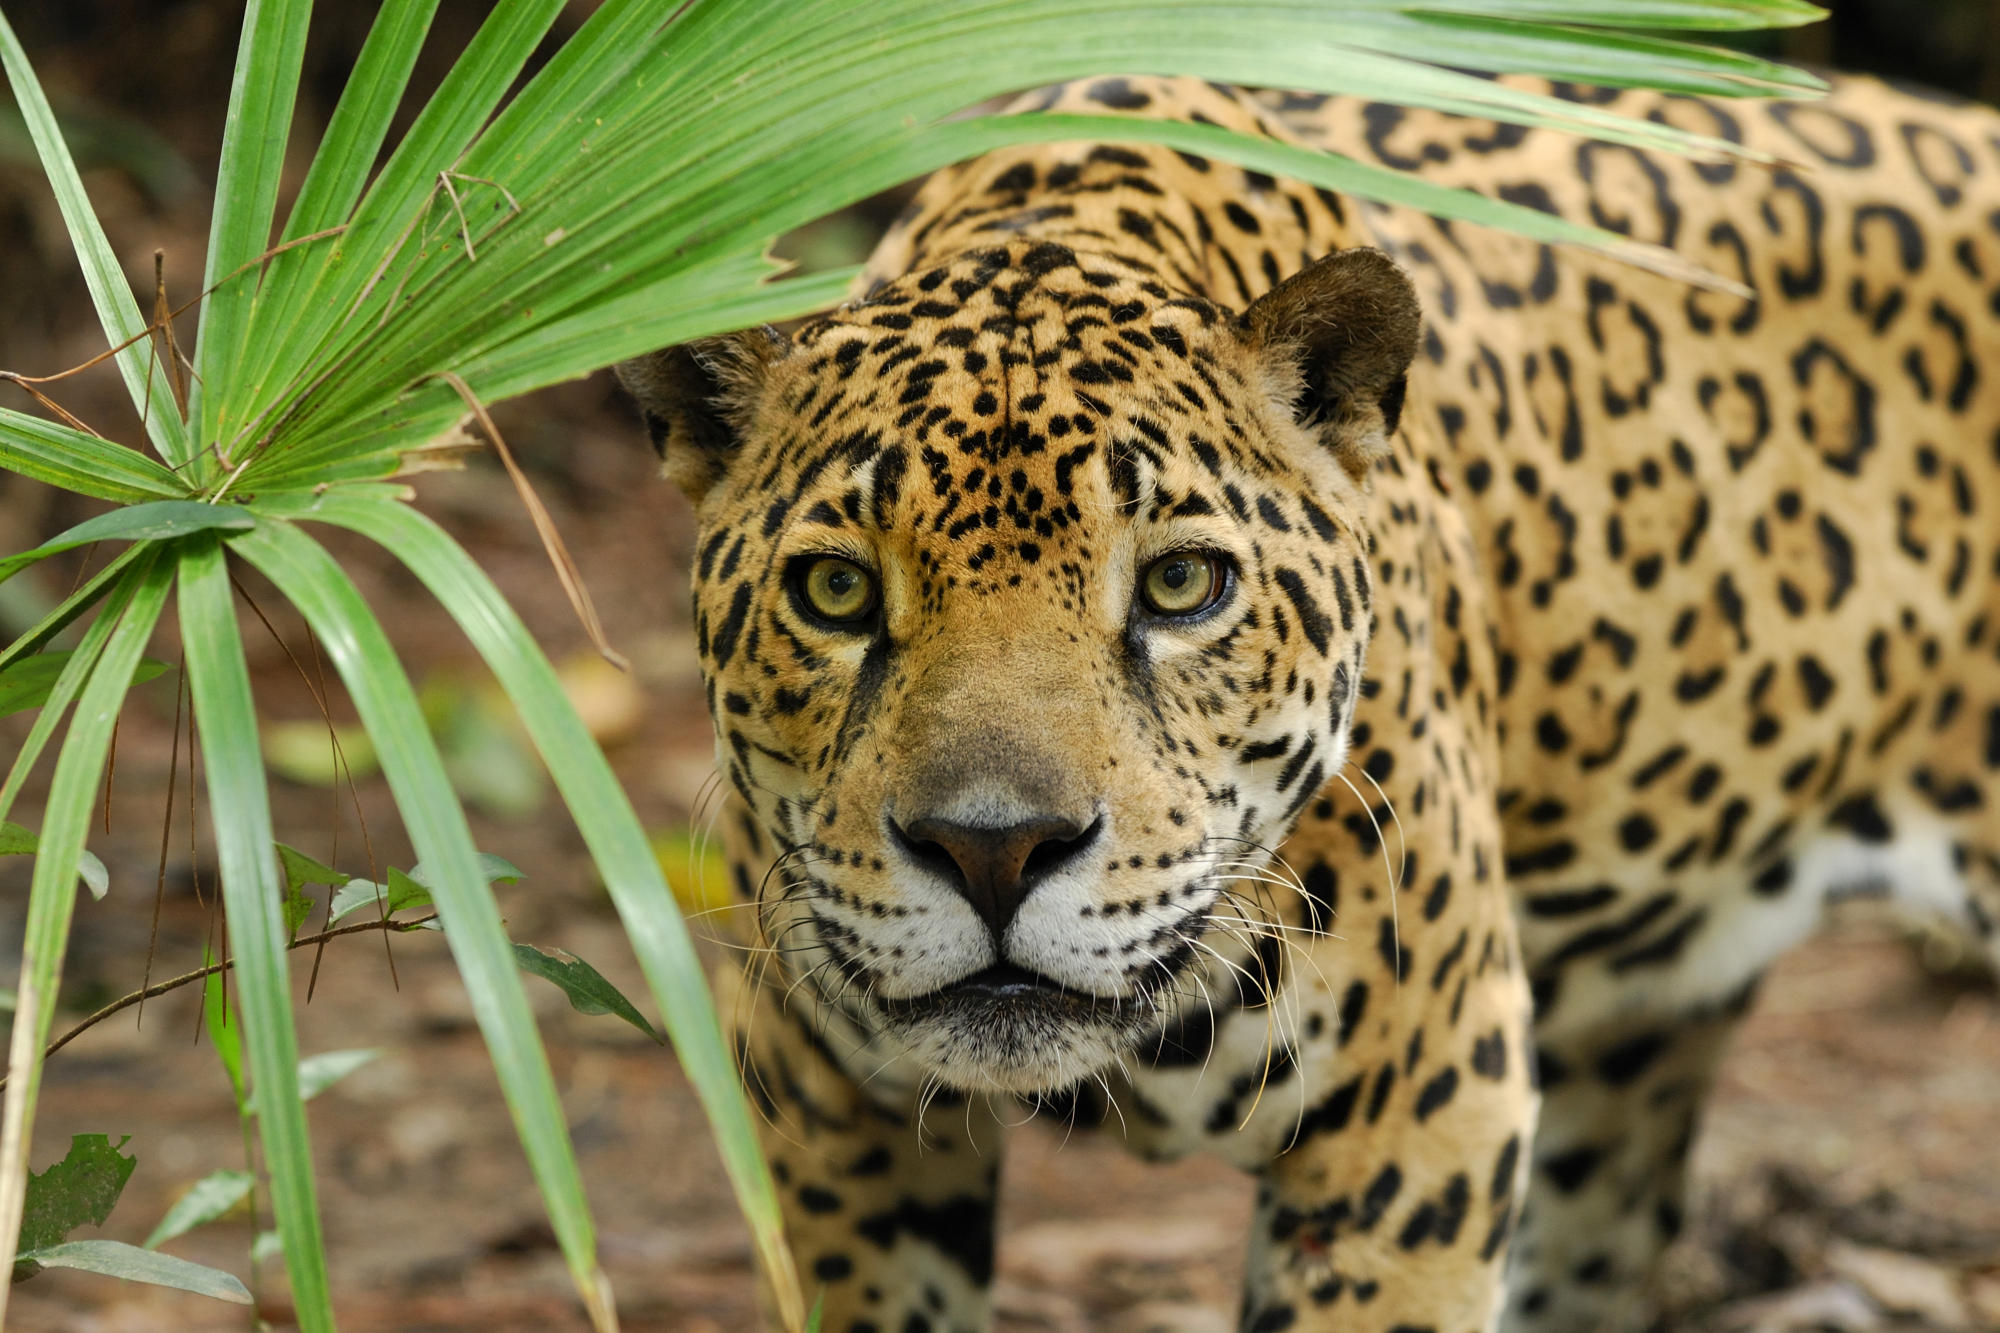 animals, jaguars, palm leaves - desktop wallpaper